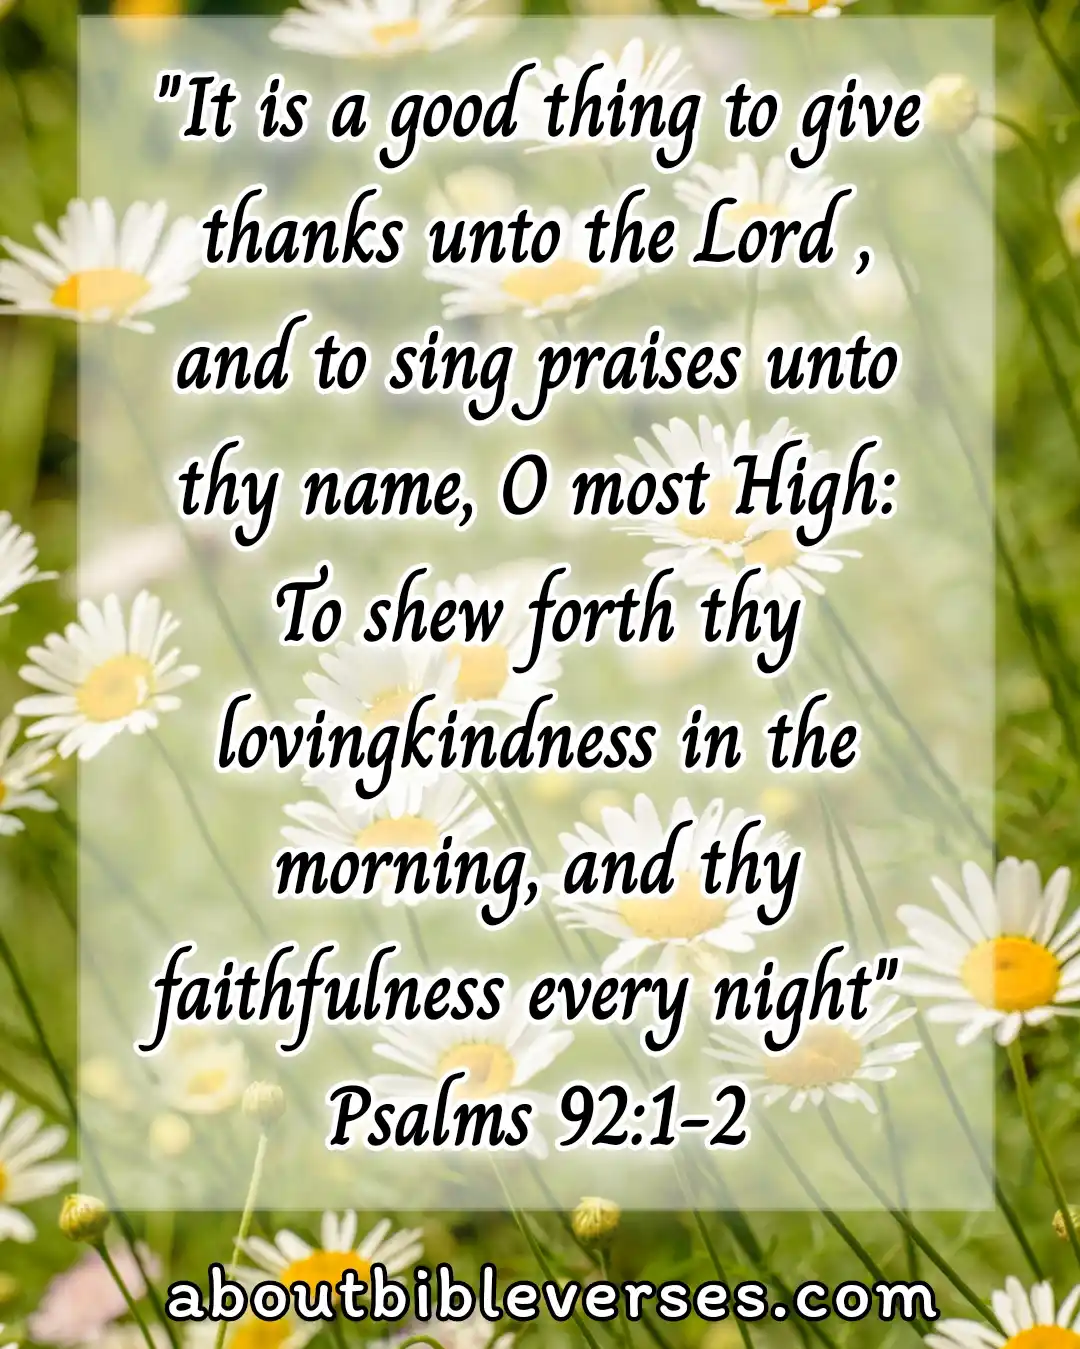 Good morning bible verses (Psalm 92:1-2)